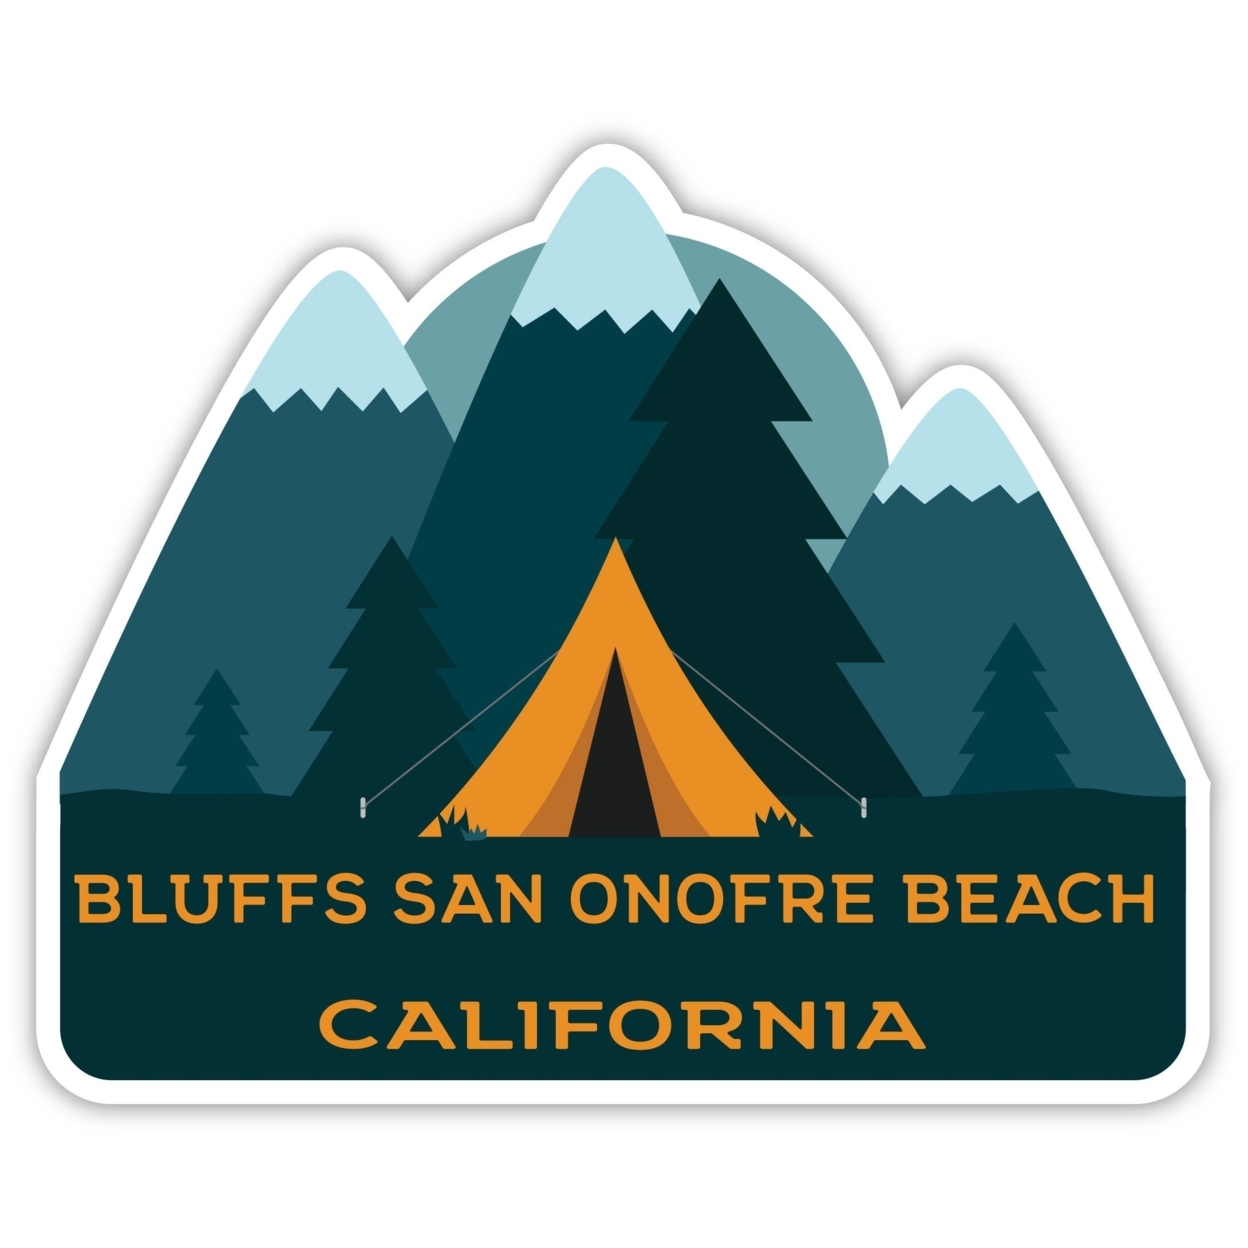 Bluffs San Onofre Beach California Souvenir Decorative Stickers (Choose Theme And Size) - Single Unit, 2-Inch, Tent